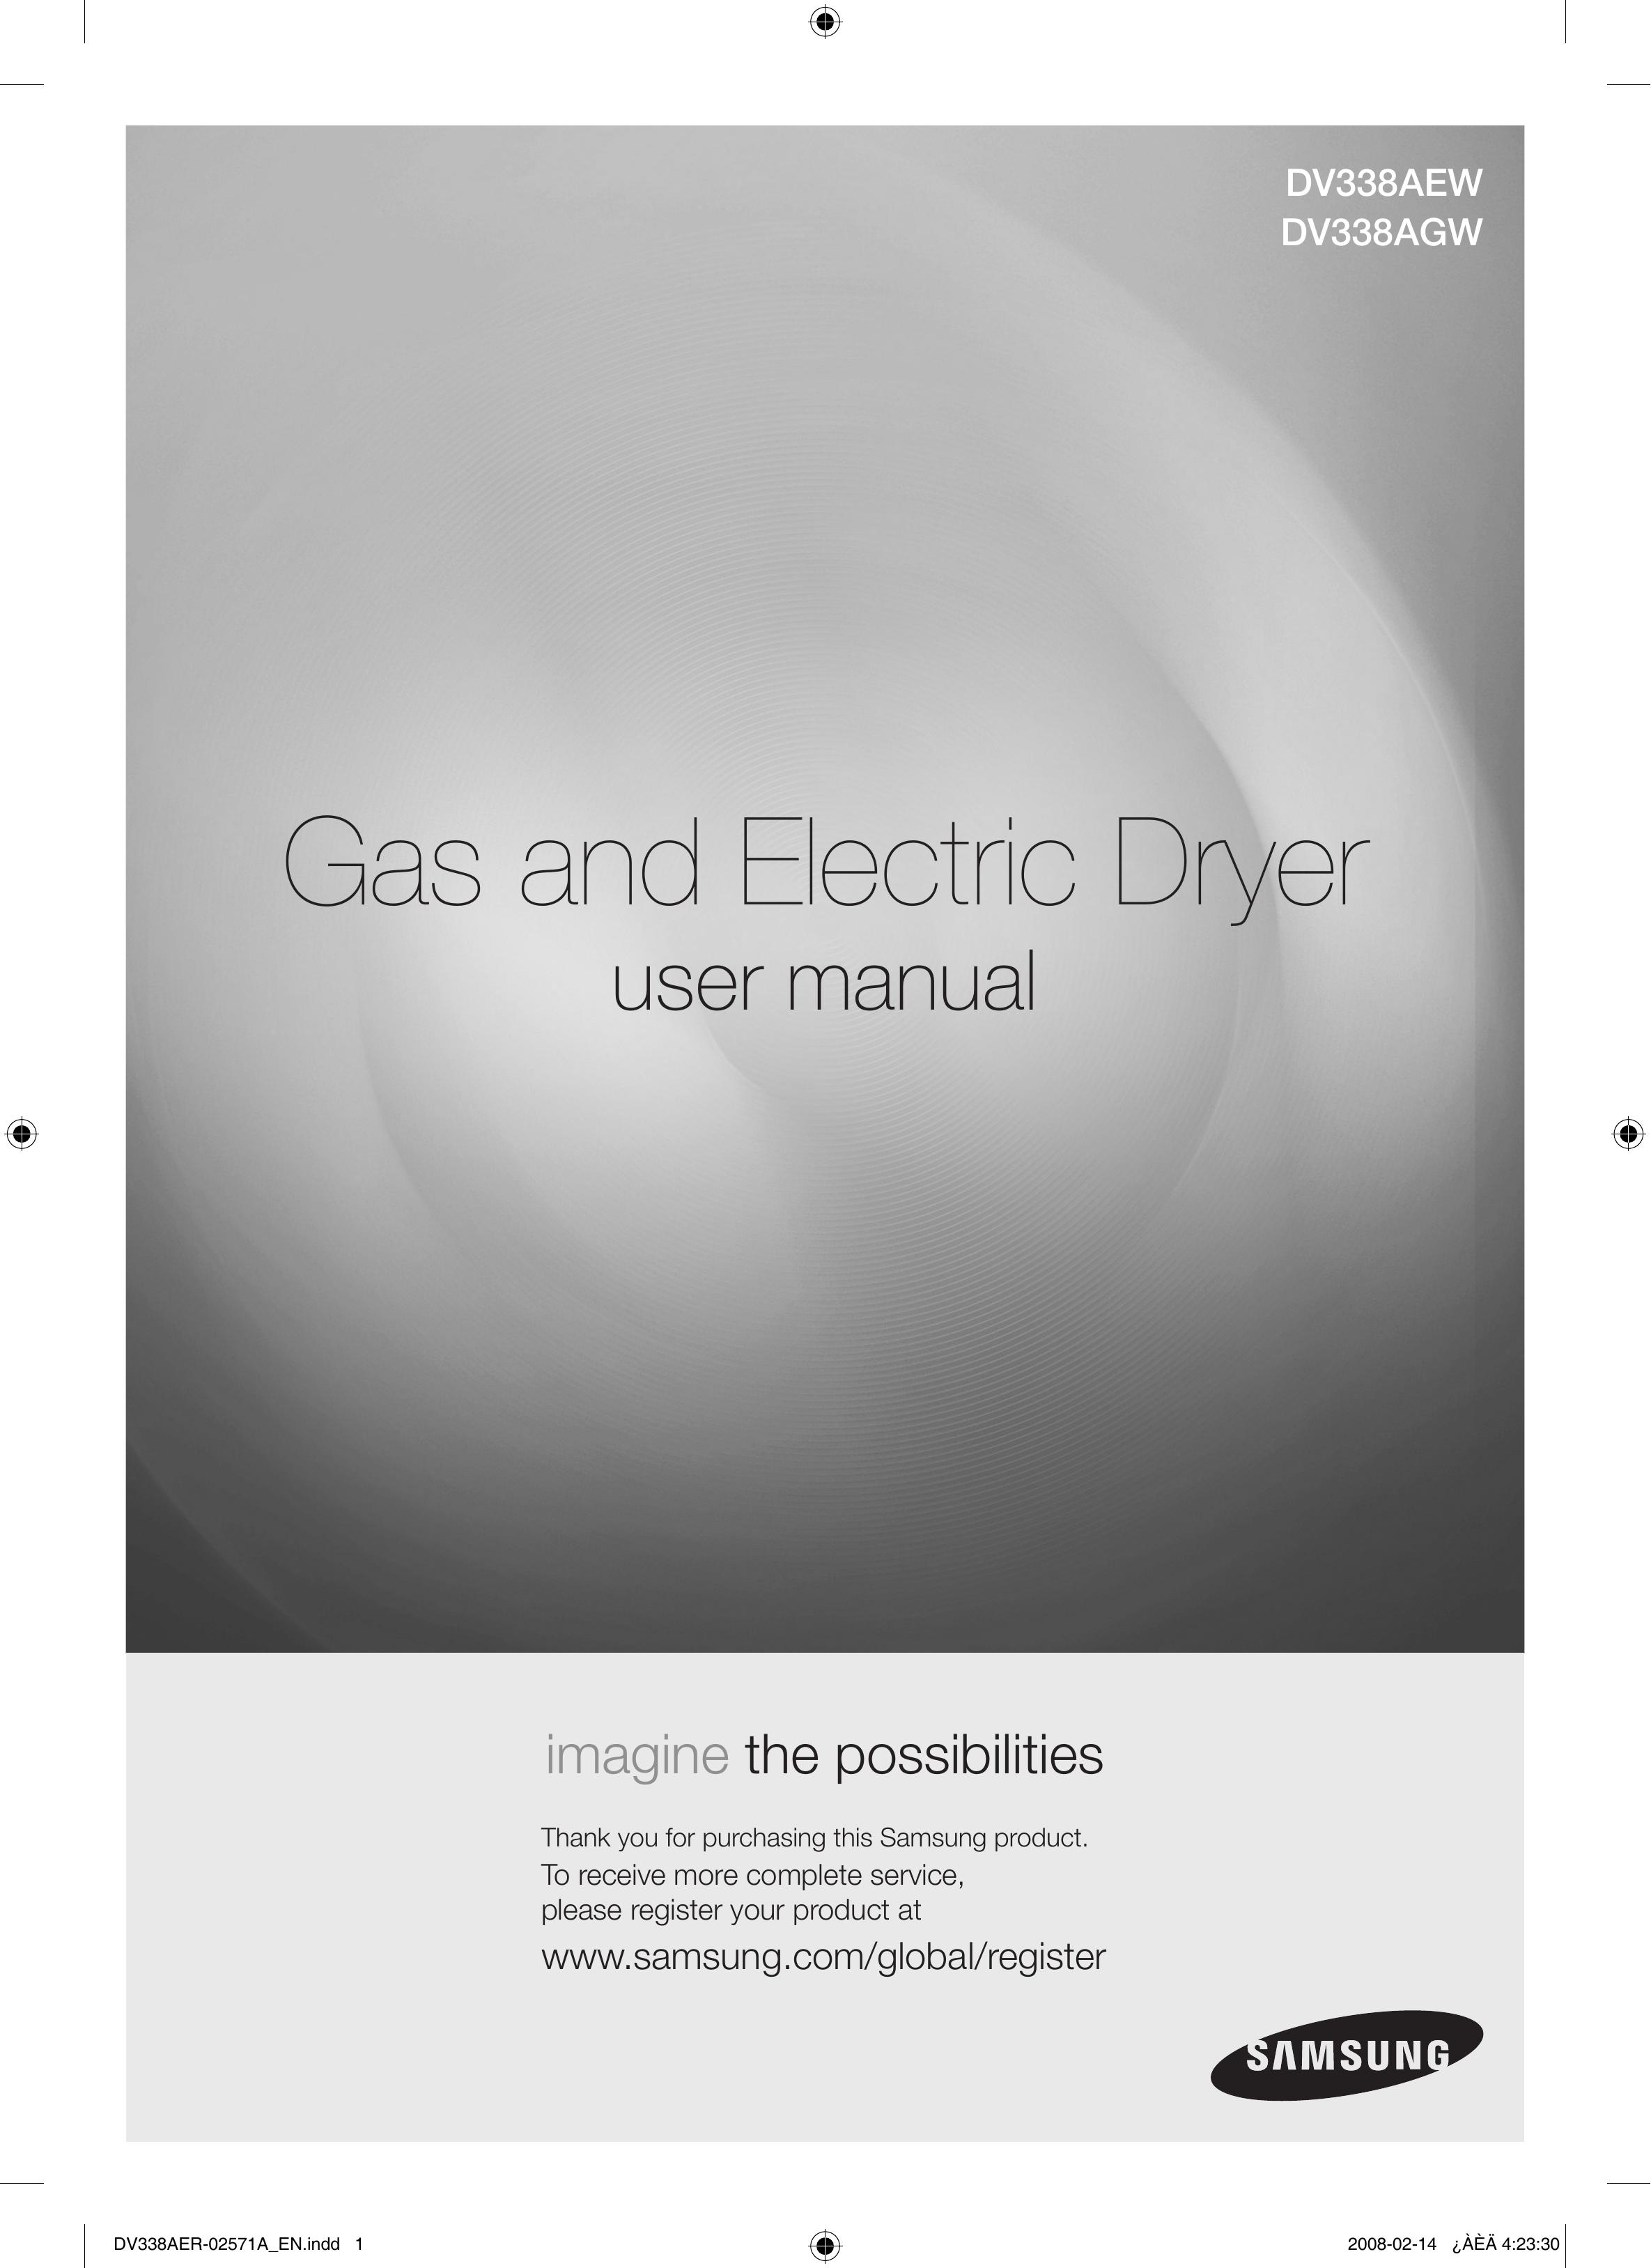 Samsung DV338AGW Clothes Dryer User Manual